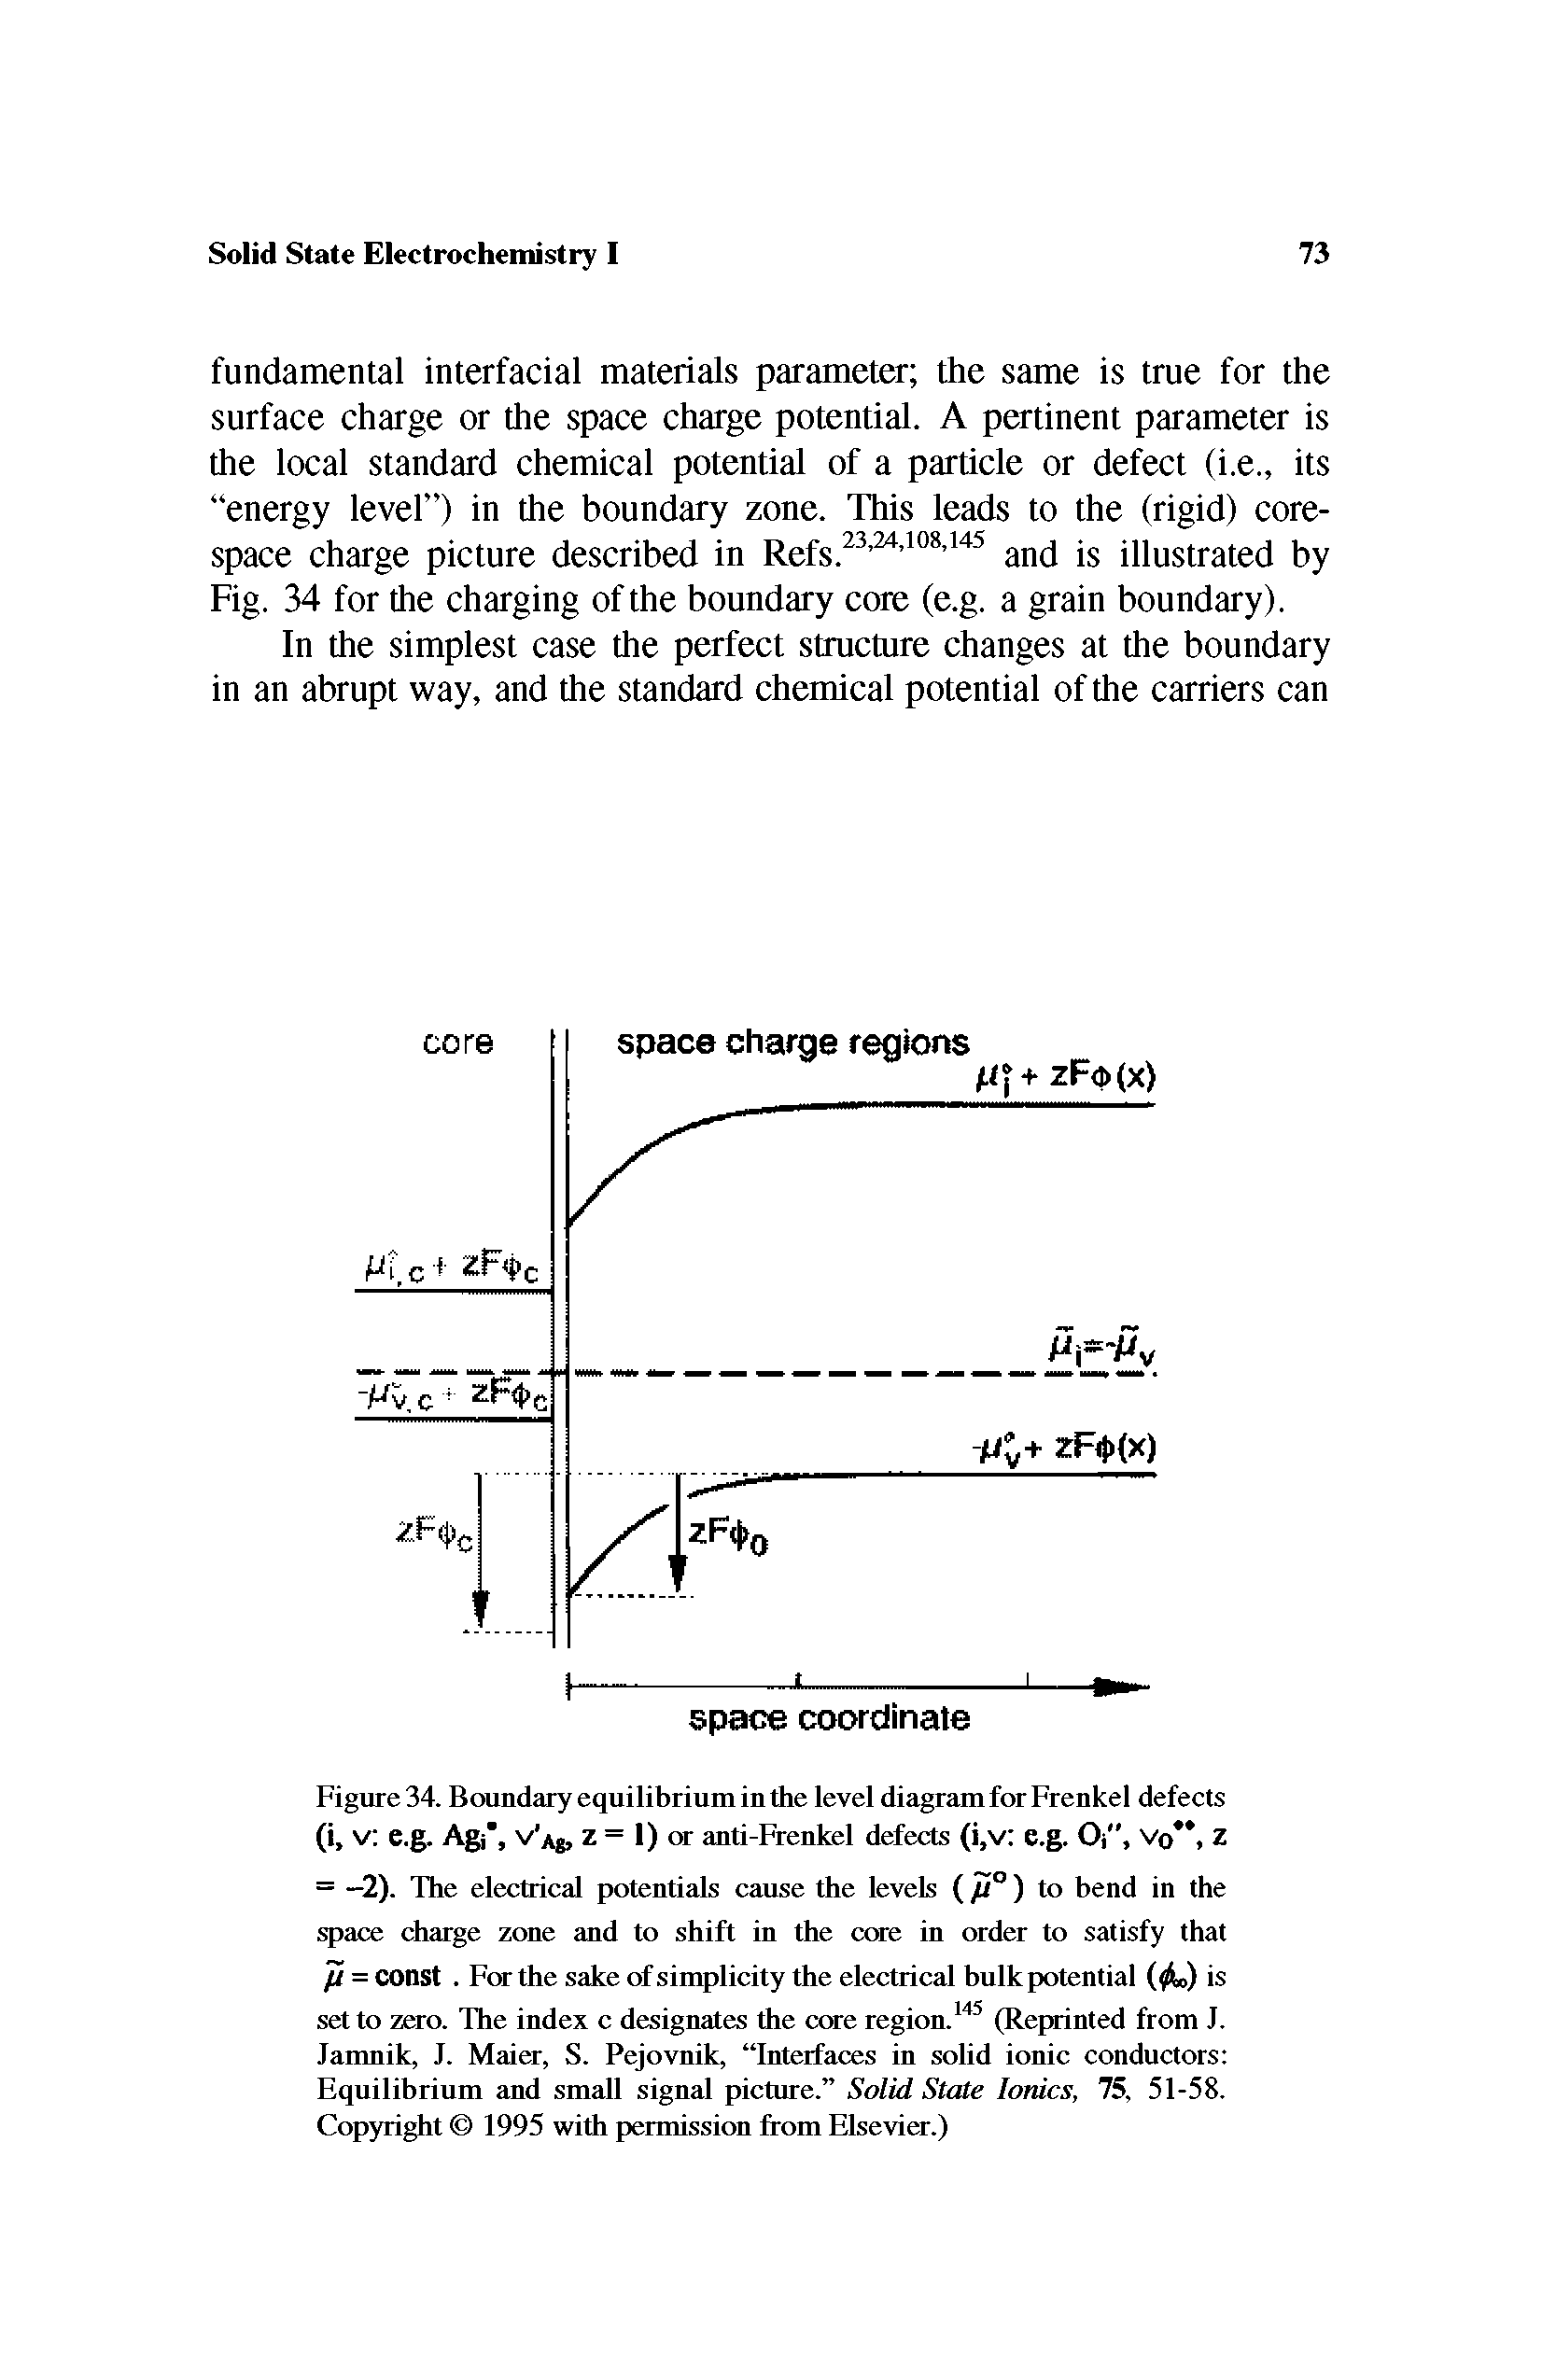 Figure 34. Boundary equilibrium in the level diagram for Frenkel defects (i, v e.g. Agj, v Ag, z = 1) or anti-Frenkel defects (i,v e.g. Oj", Vo, z...